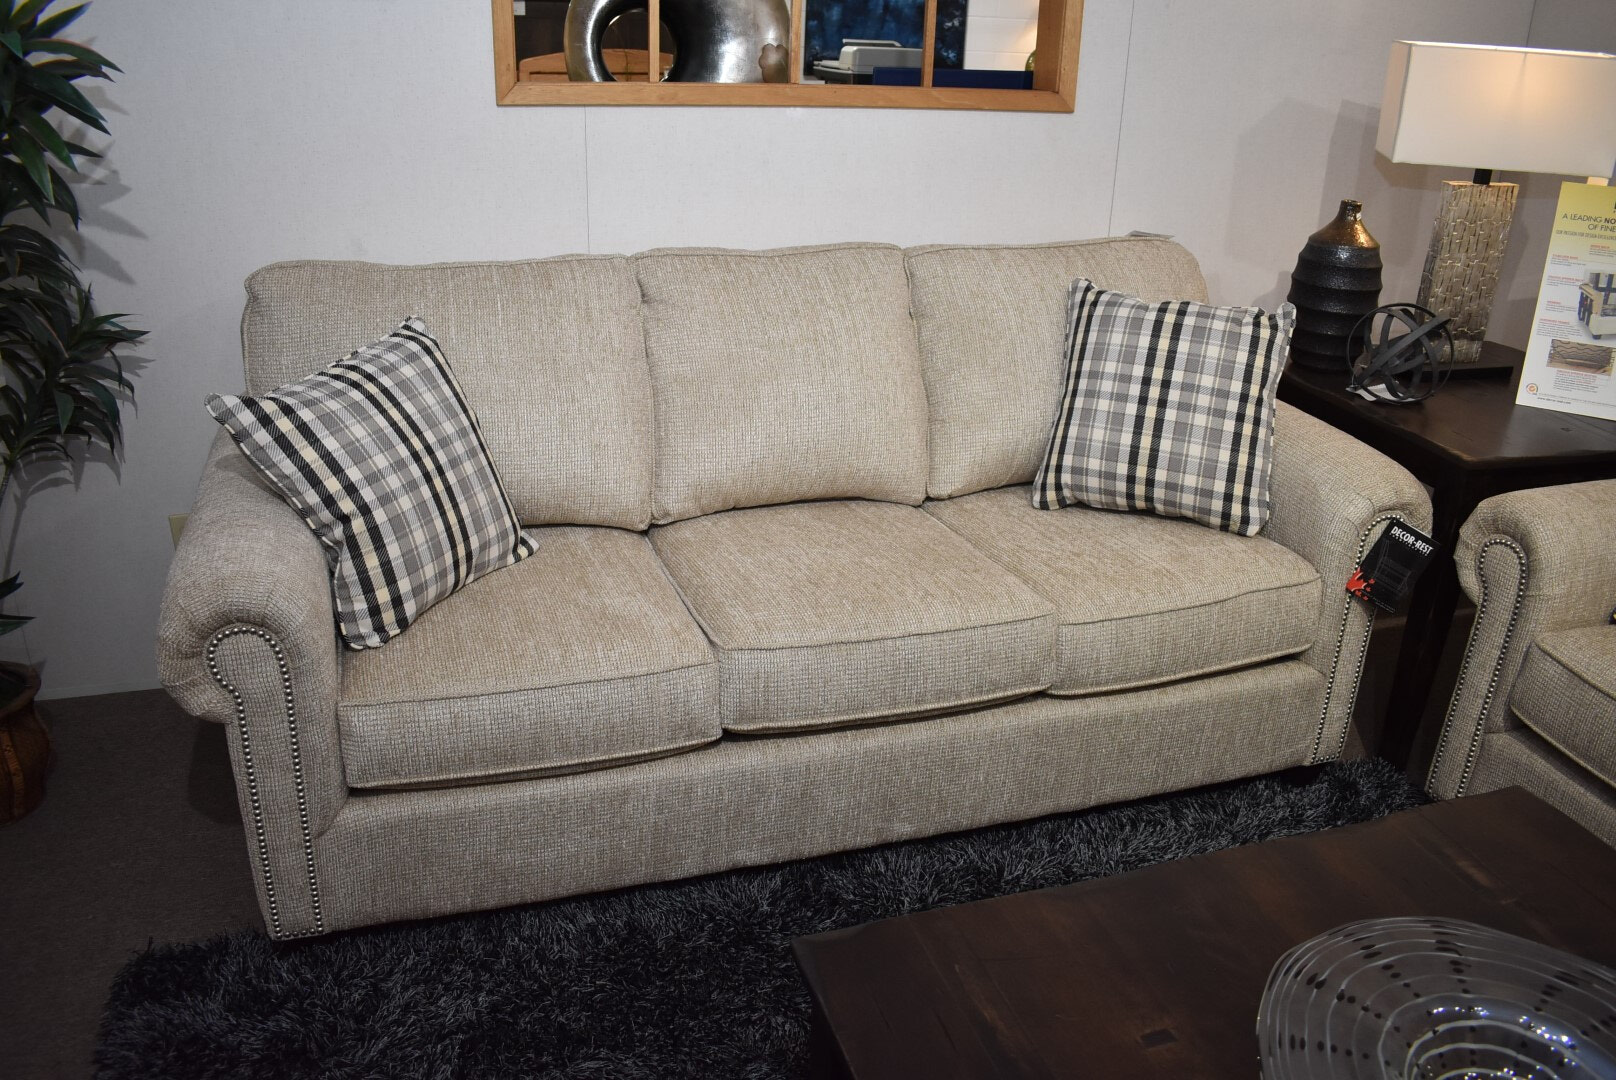 Decor-Rest Sofa